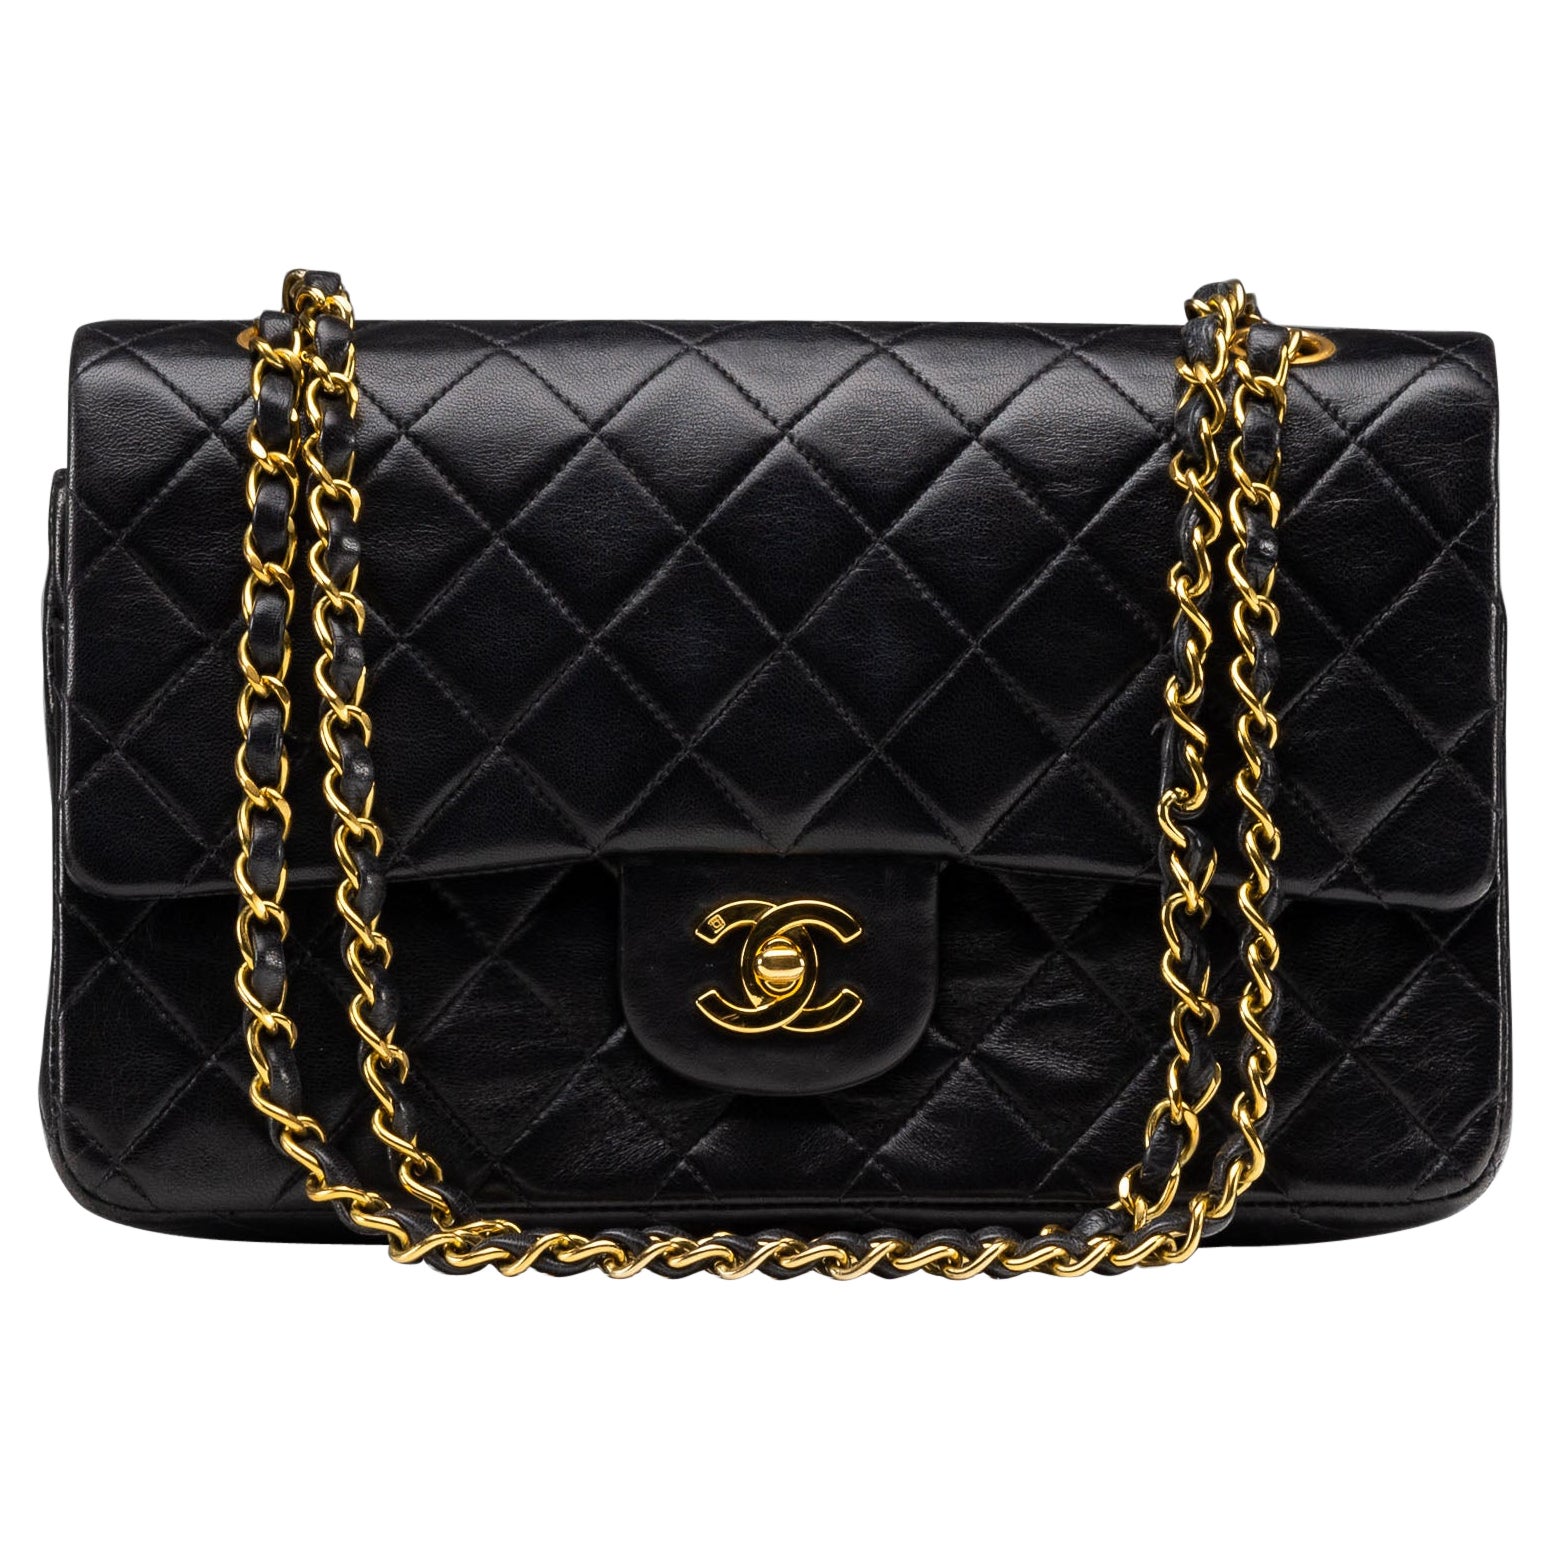 Chanel Classic Medium Lambskin Black 24k gold-plated hardware